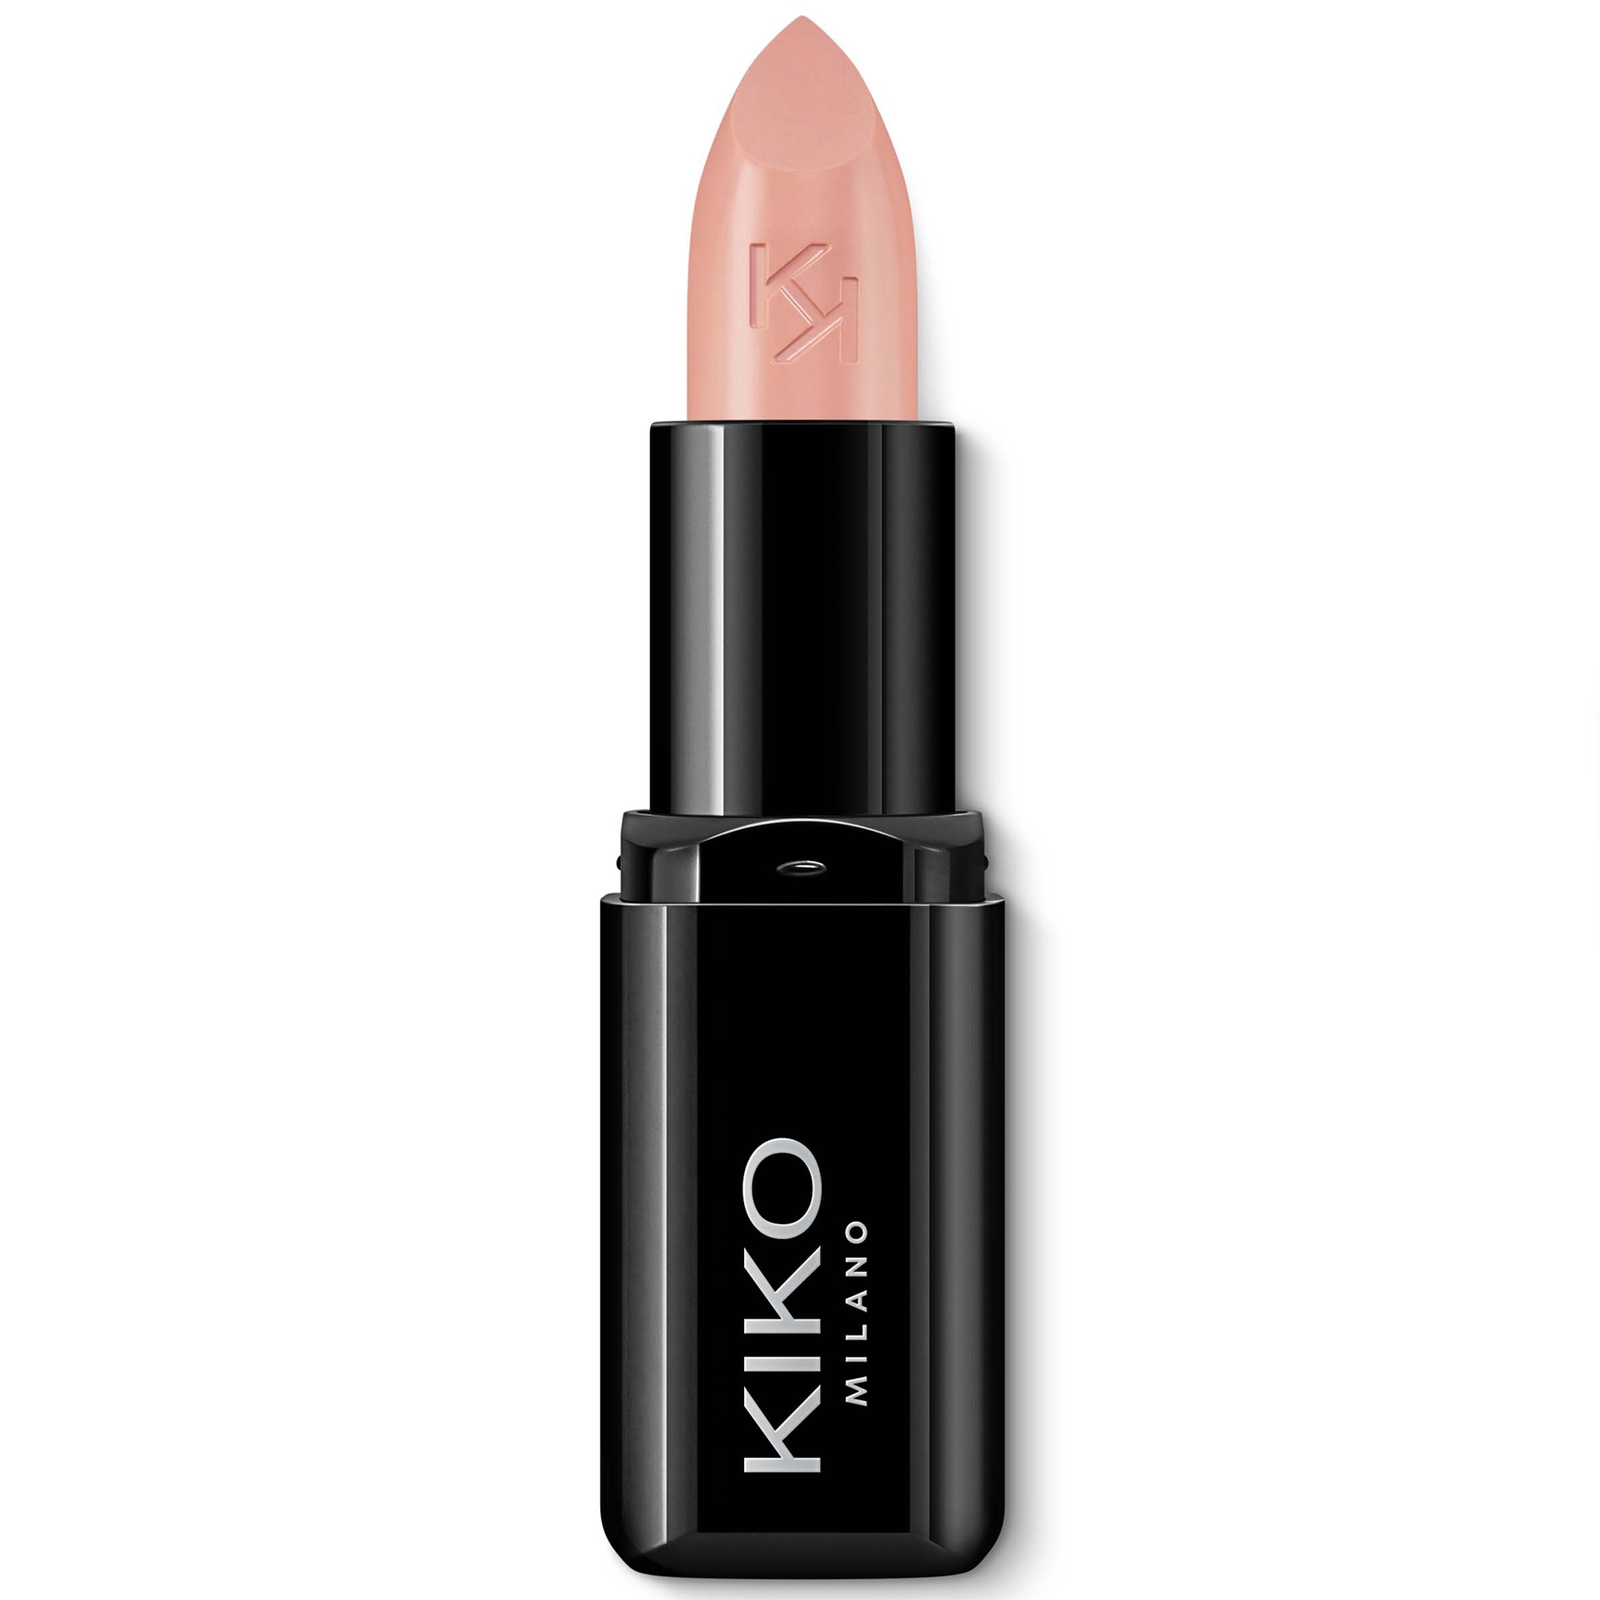 Image of KIKO Milano Smart Fusion Lipstick 3g (Various Shades) - 401 Cachemire Beige